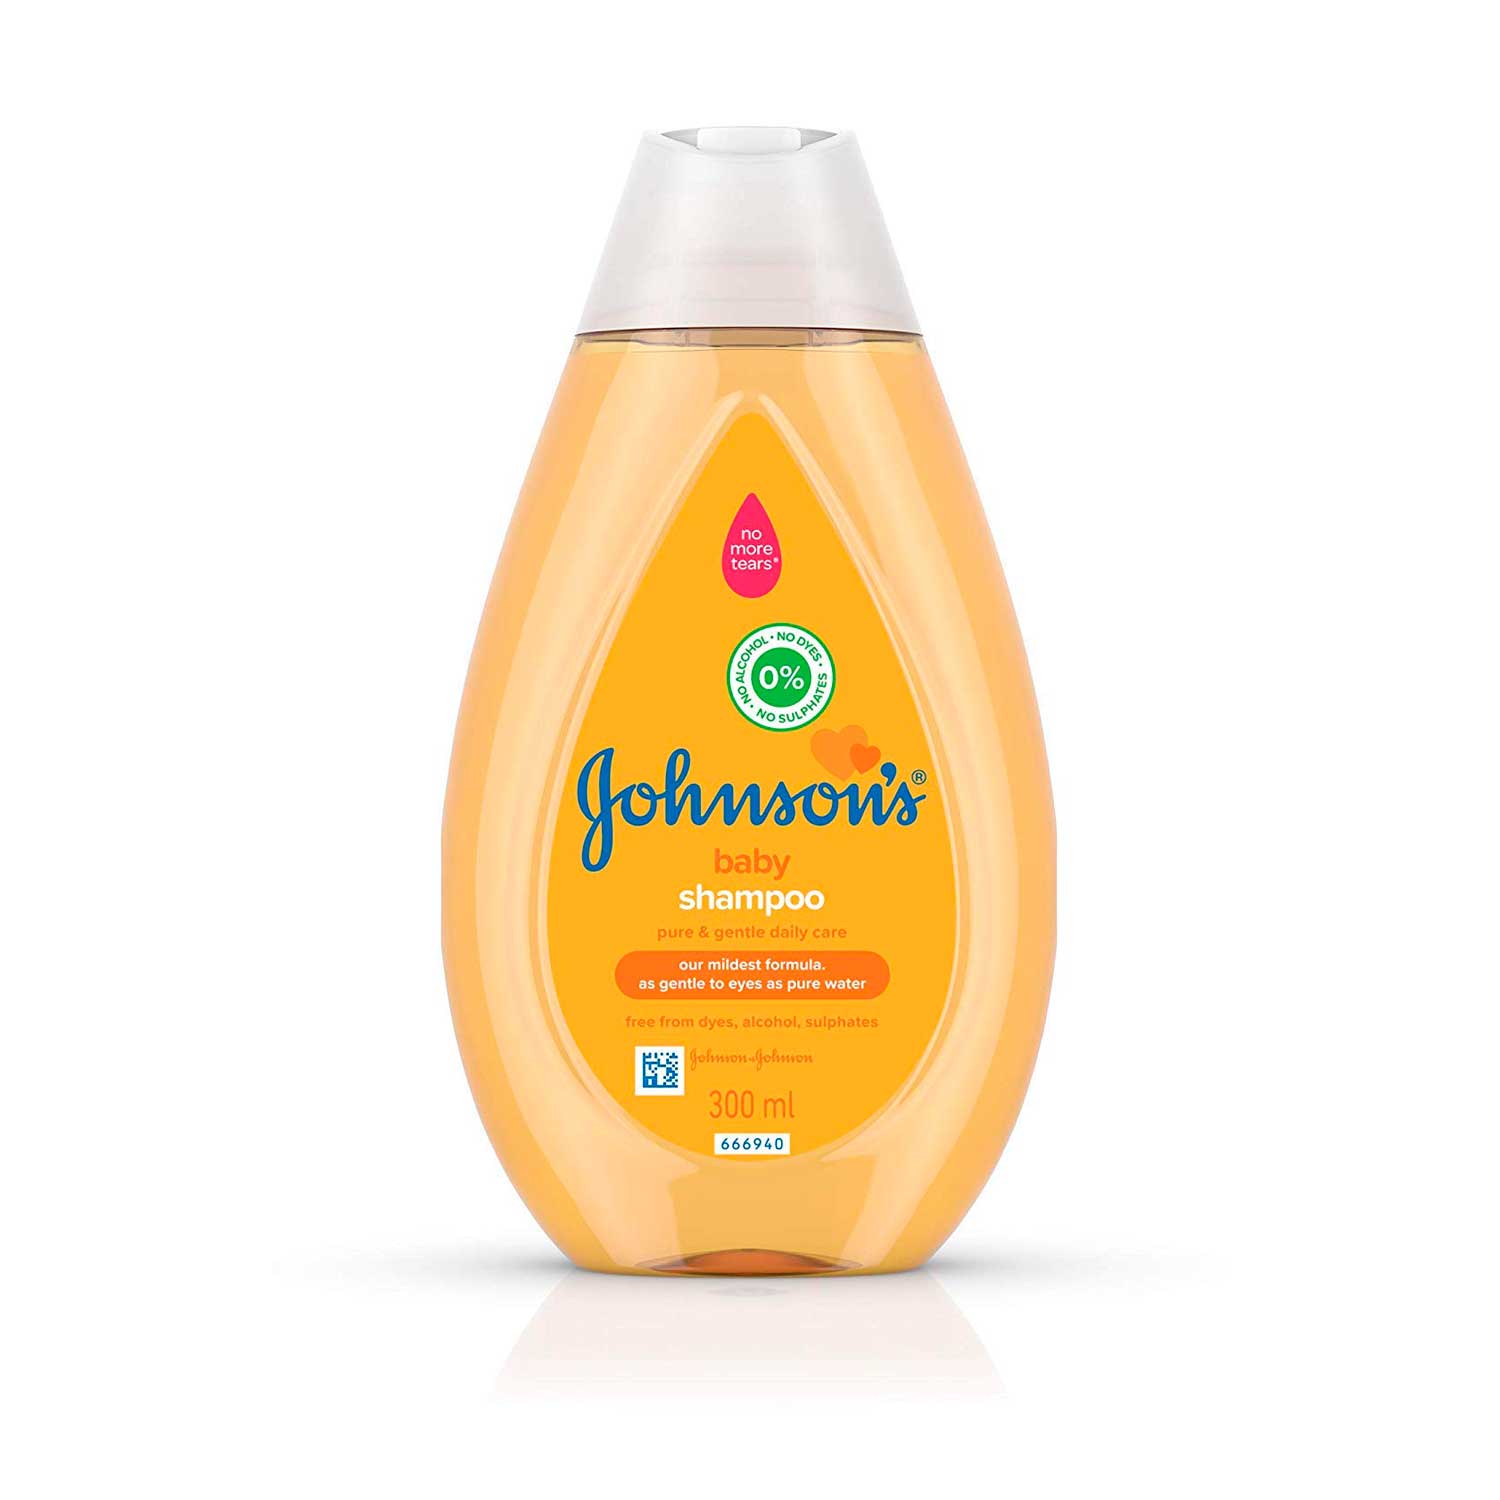 shampoo johnson